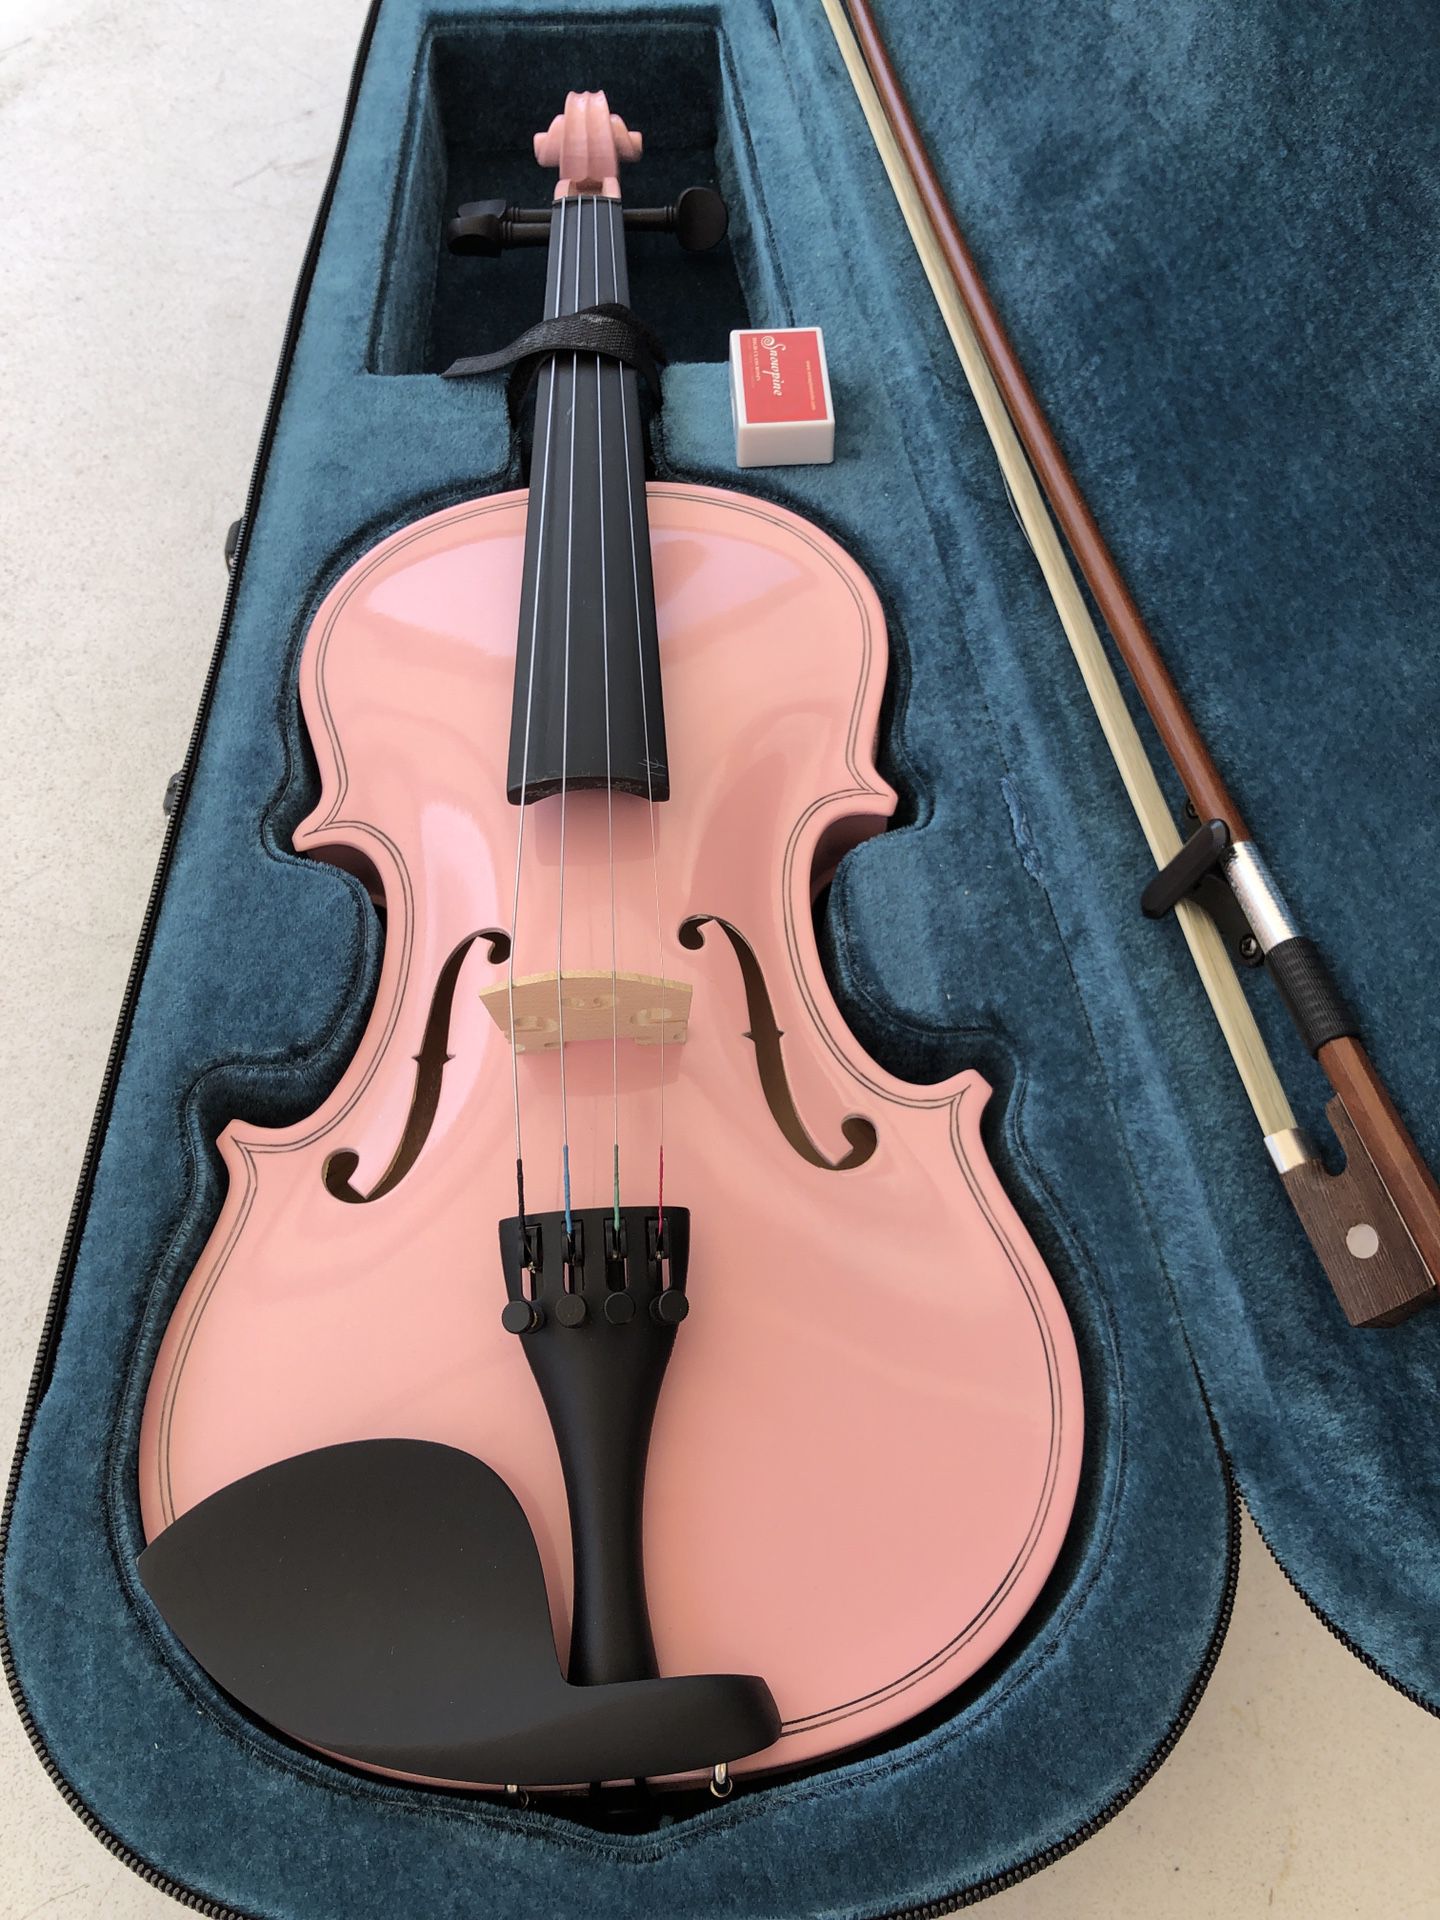 New Pink Violin 